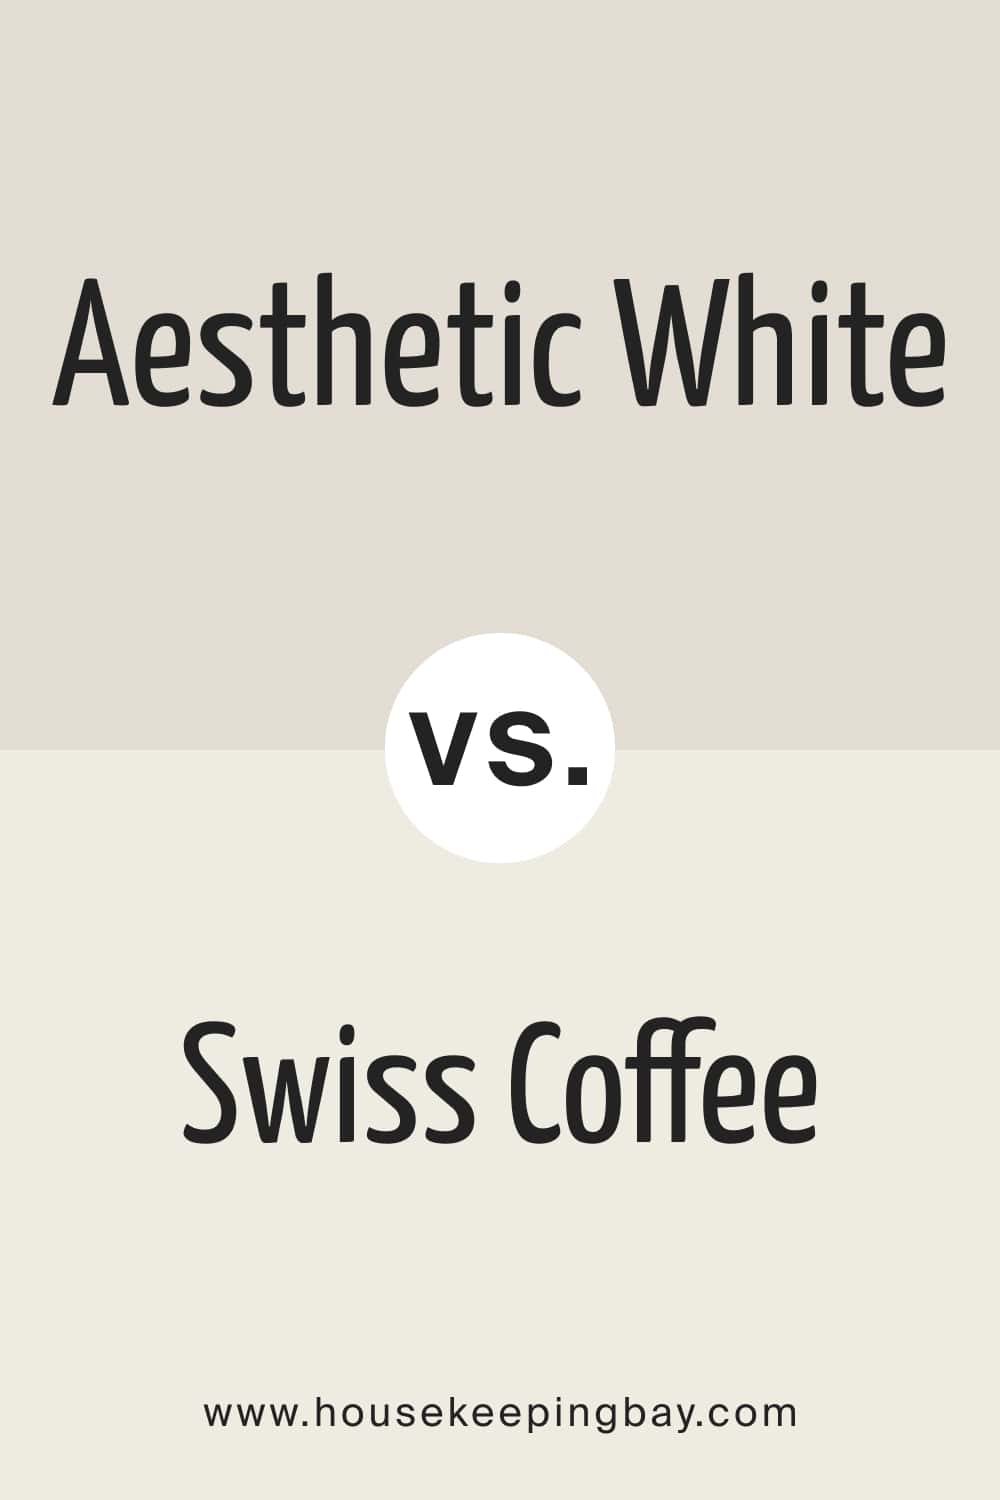 Aesthetic White vs. Swiss Coffee